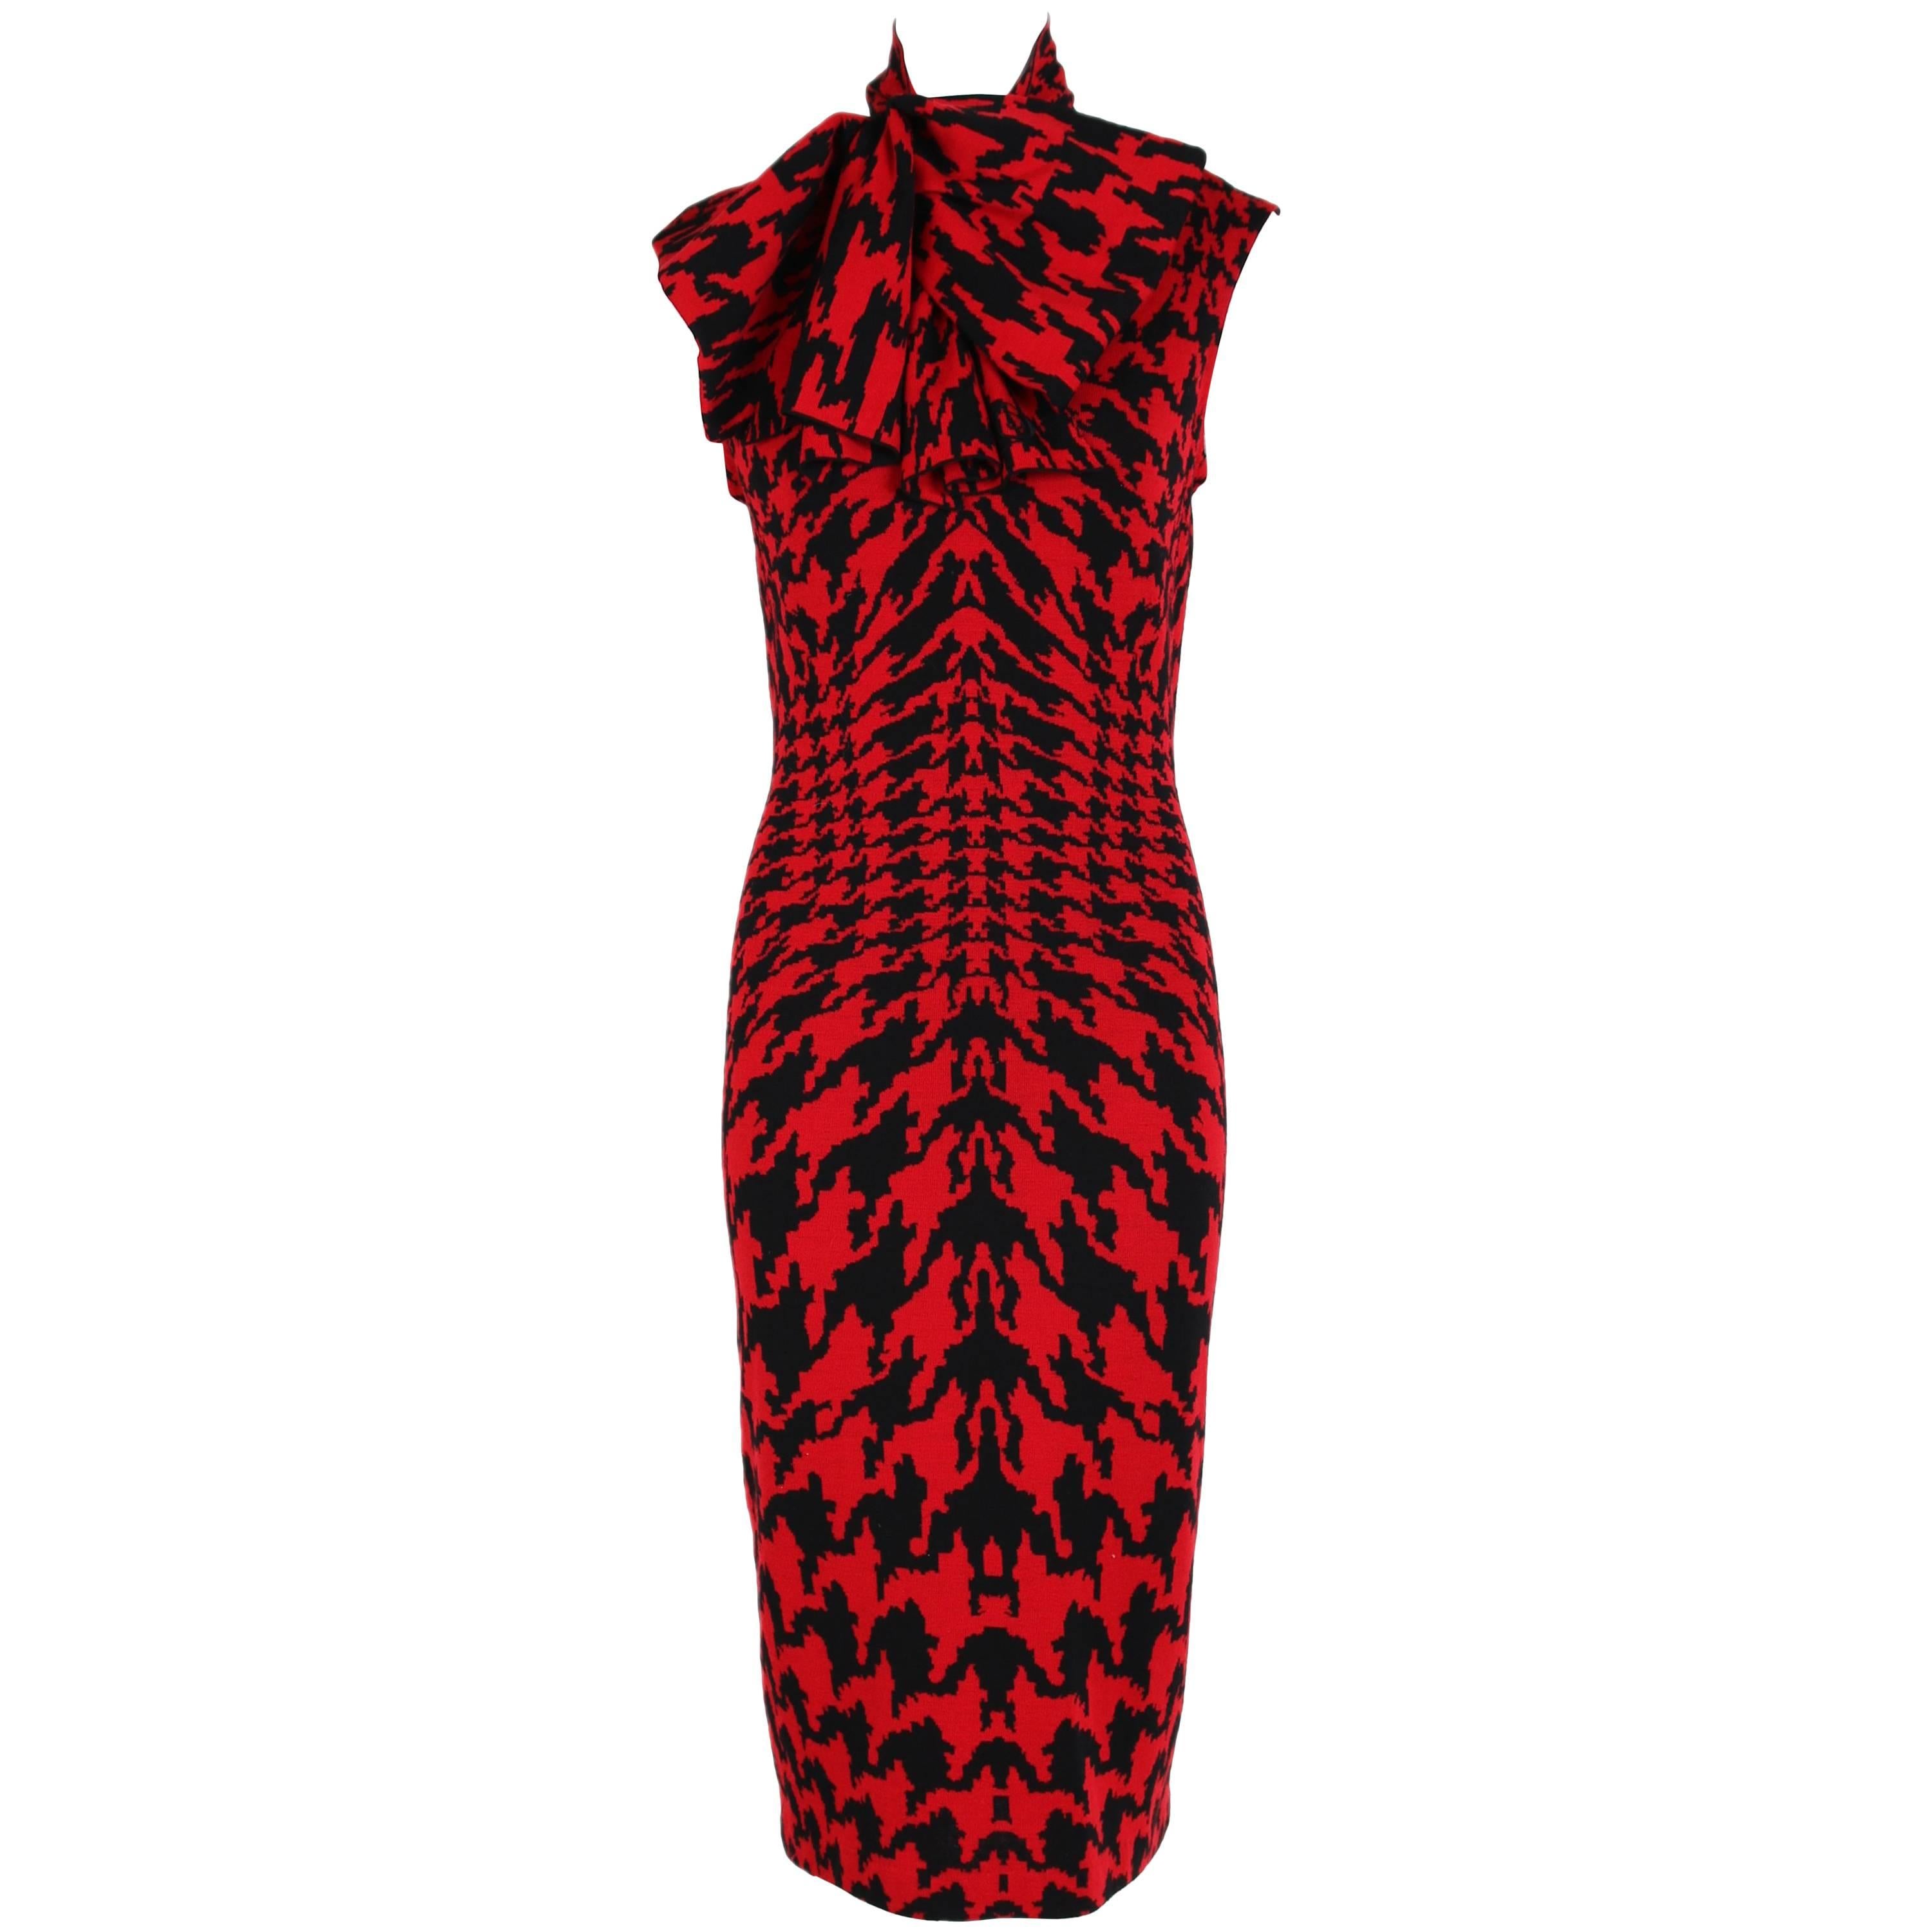 2009 Alexander McQueen "Horn of Plenty" Dogtooth Pattern Dress in Red & Black